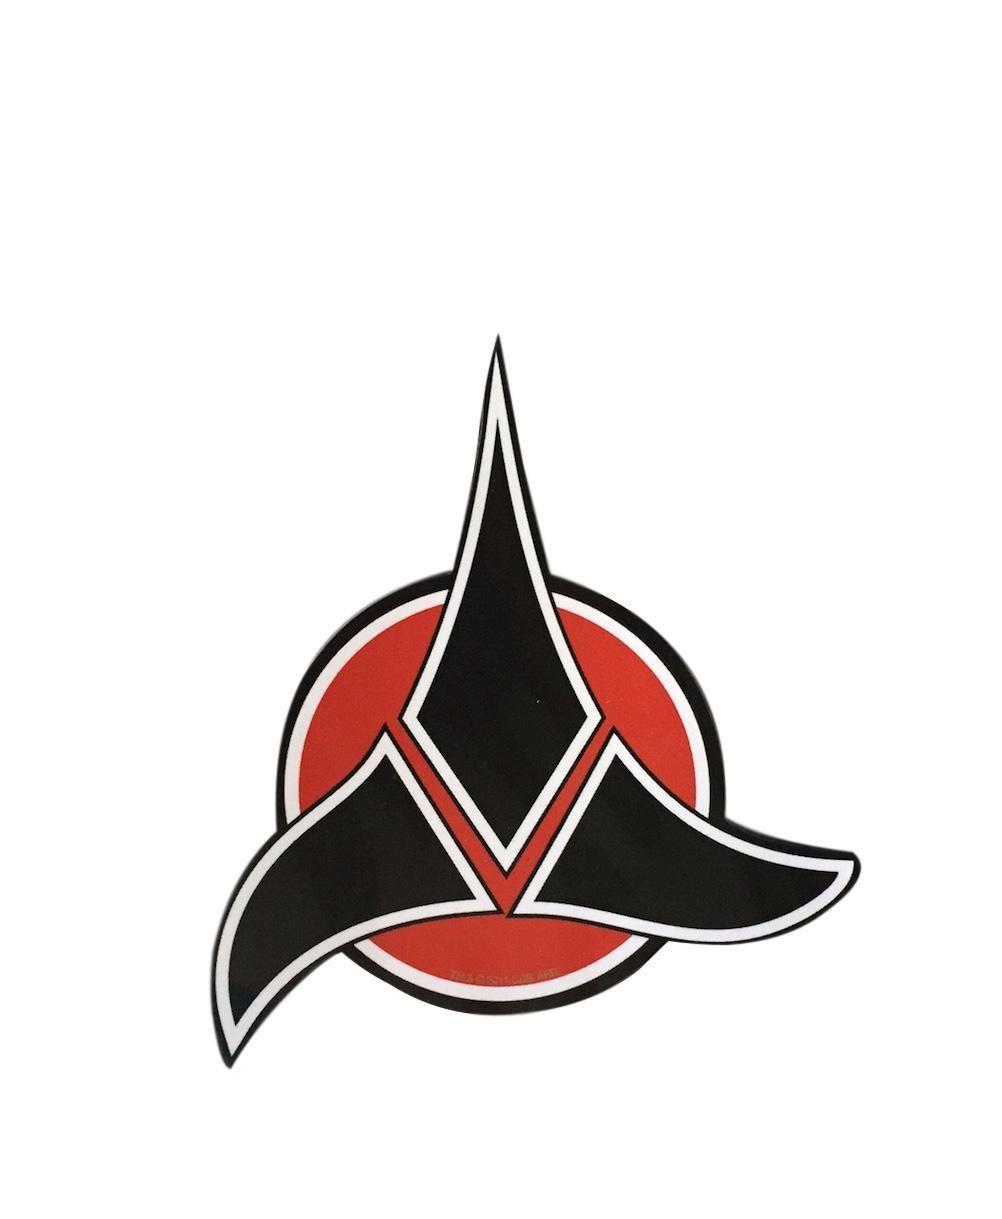 Red Star Trek Logo - Star Trek Klingon Red and Black Symbol Logo 4 Inch Peel and Stick